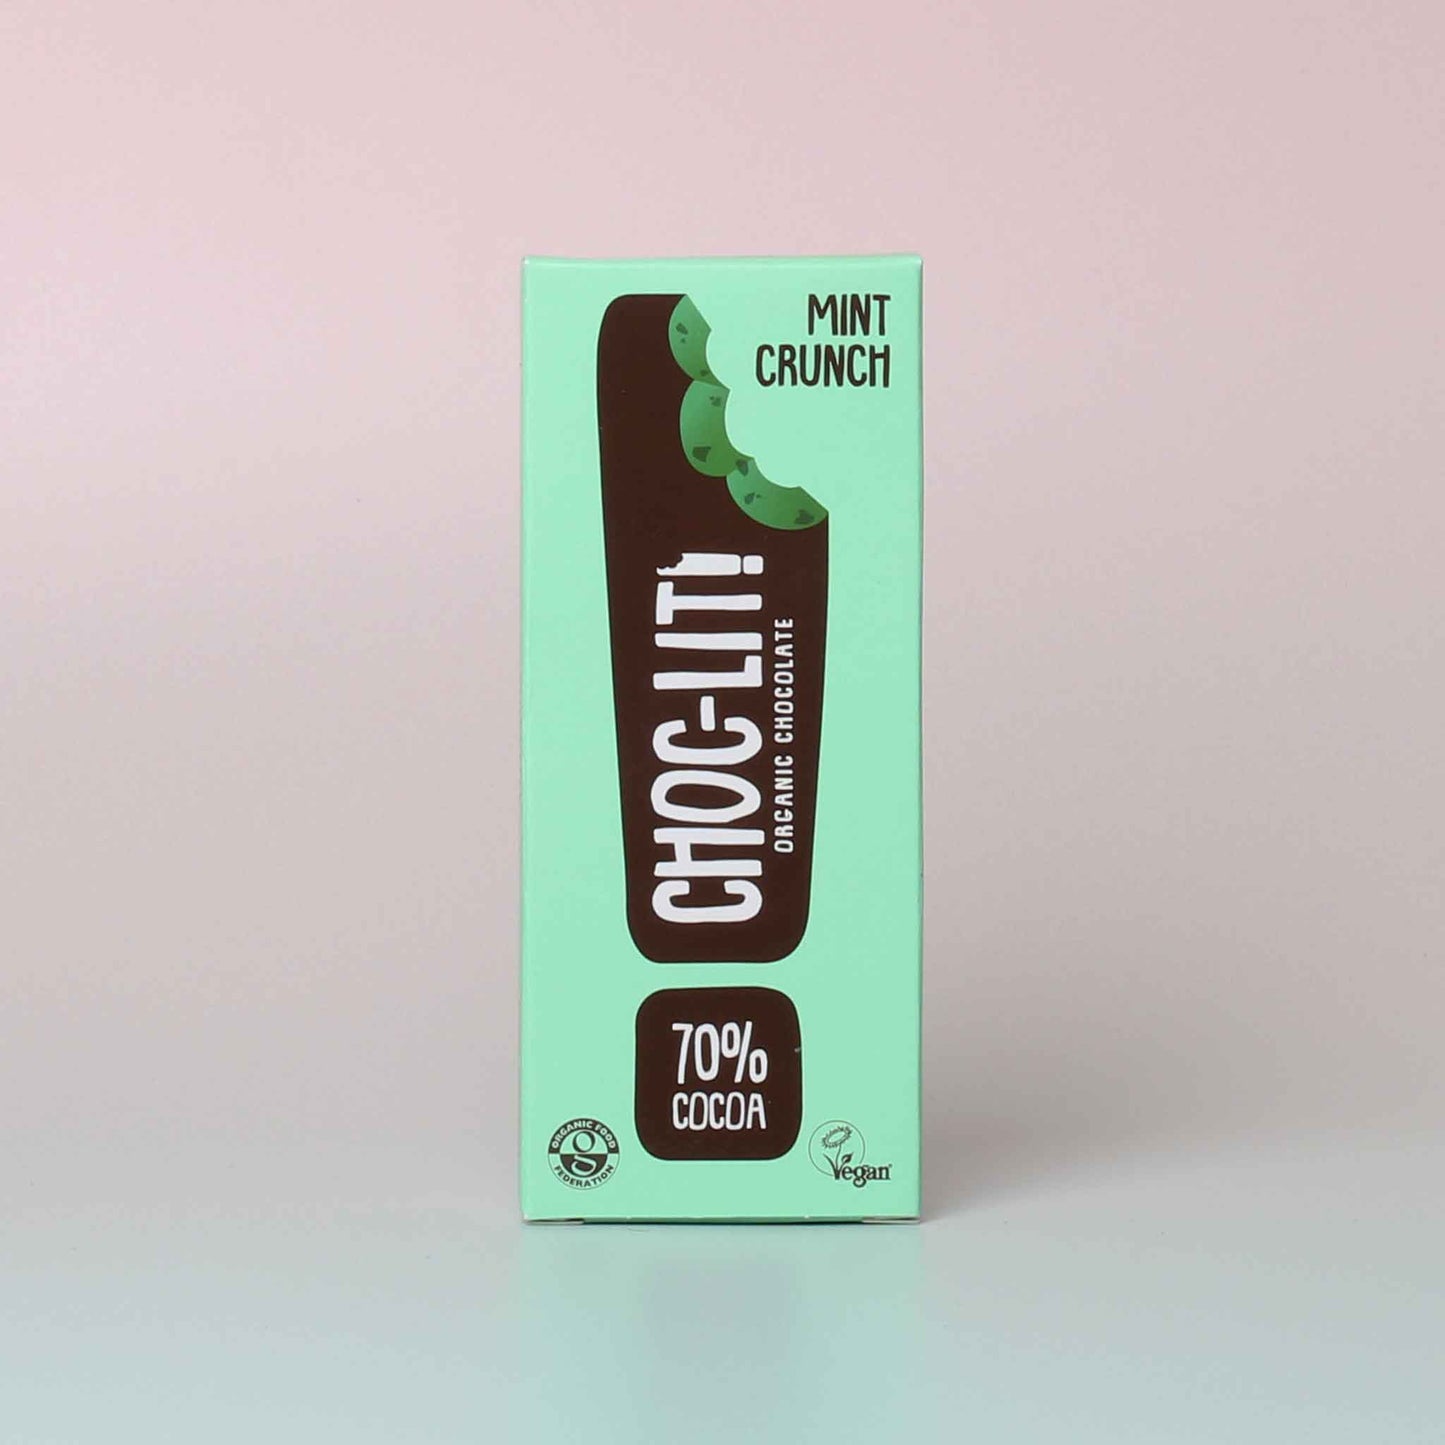 choc lit vegan chocolate mint crunch